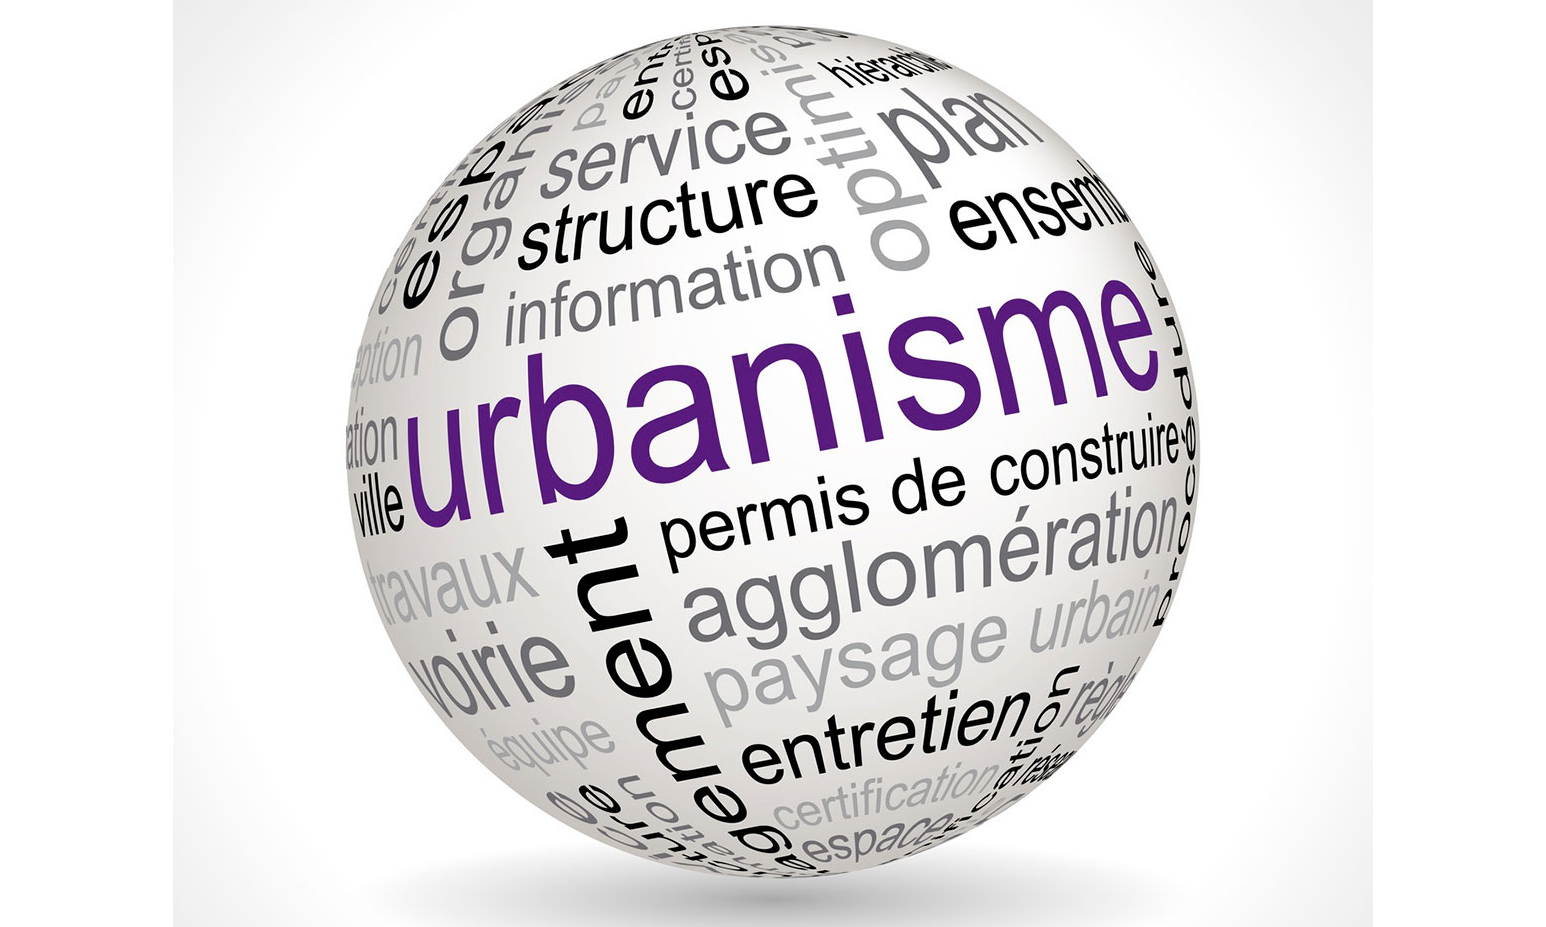 Information urbanisme